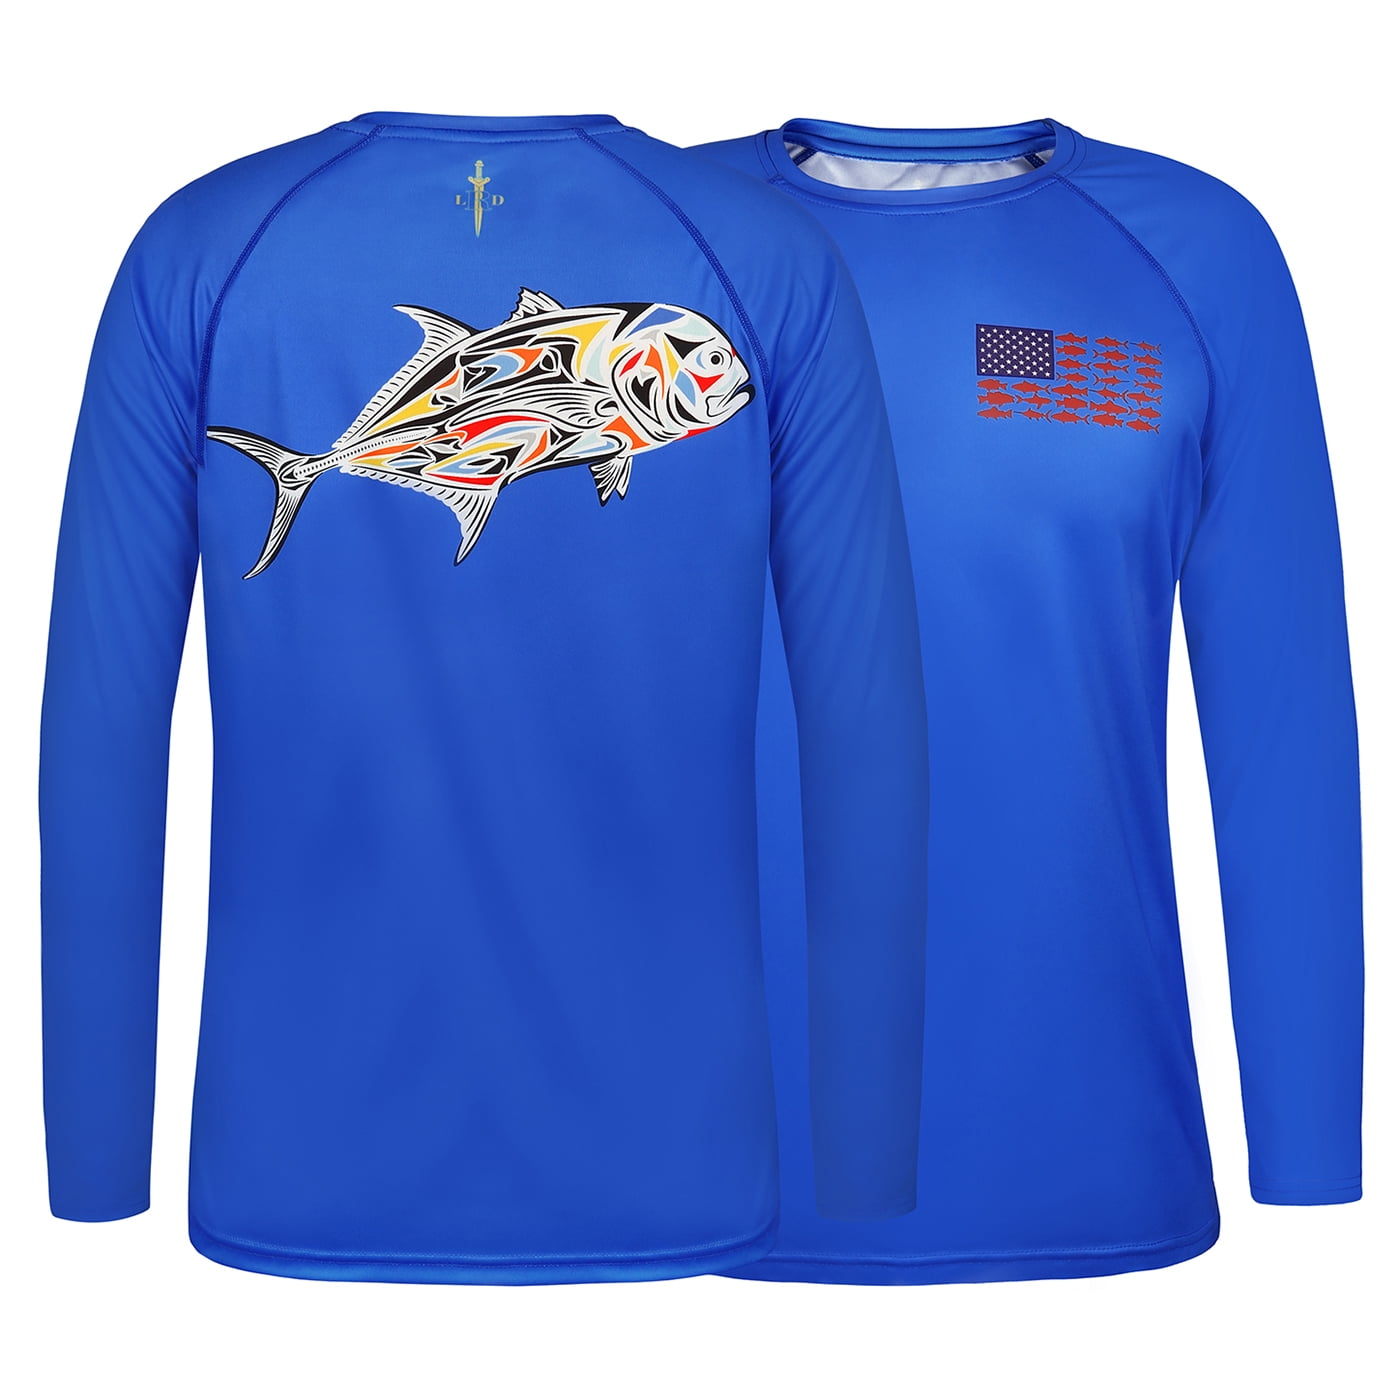 Mens tank top Mahi Mahi fishing decal fish design sleeveless tee shirt for men 